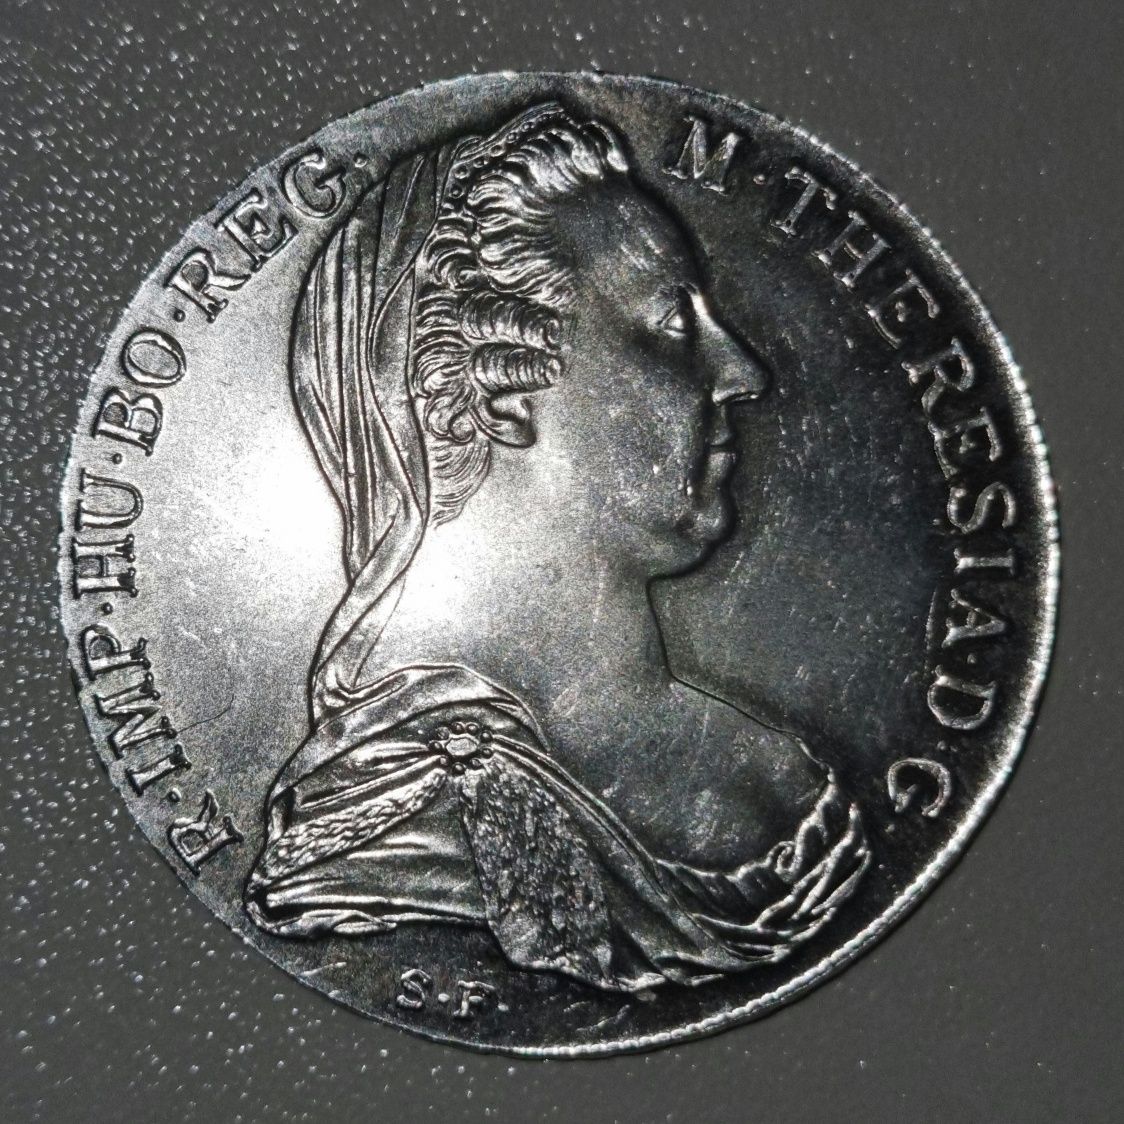 1 taler austriac din argint - Maria Theresia - 1780